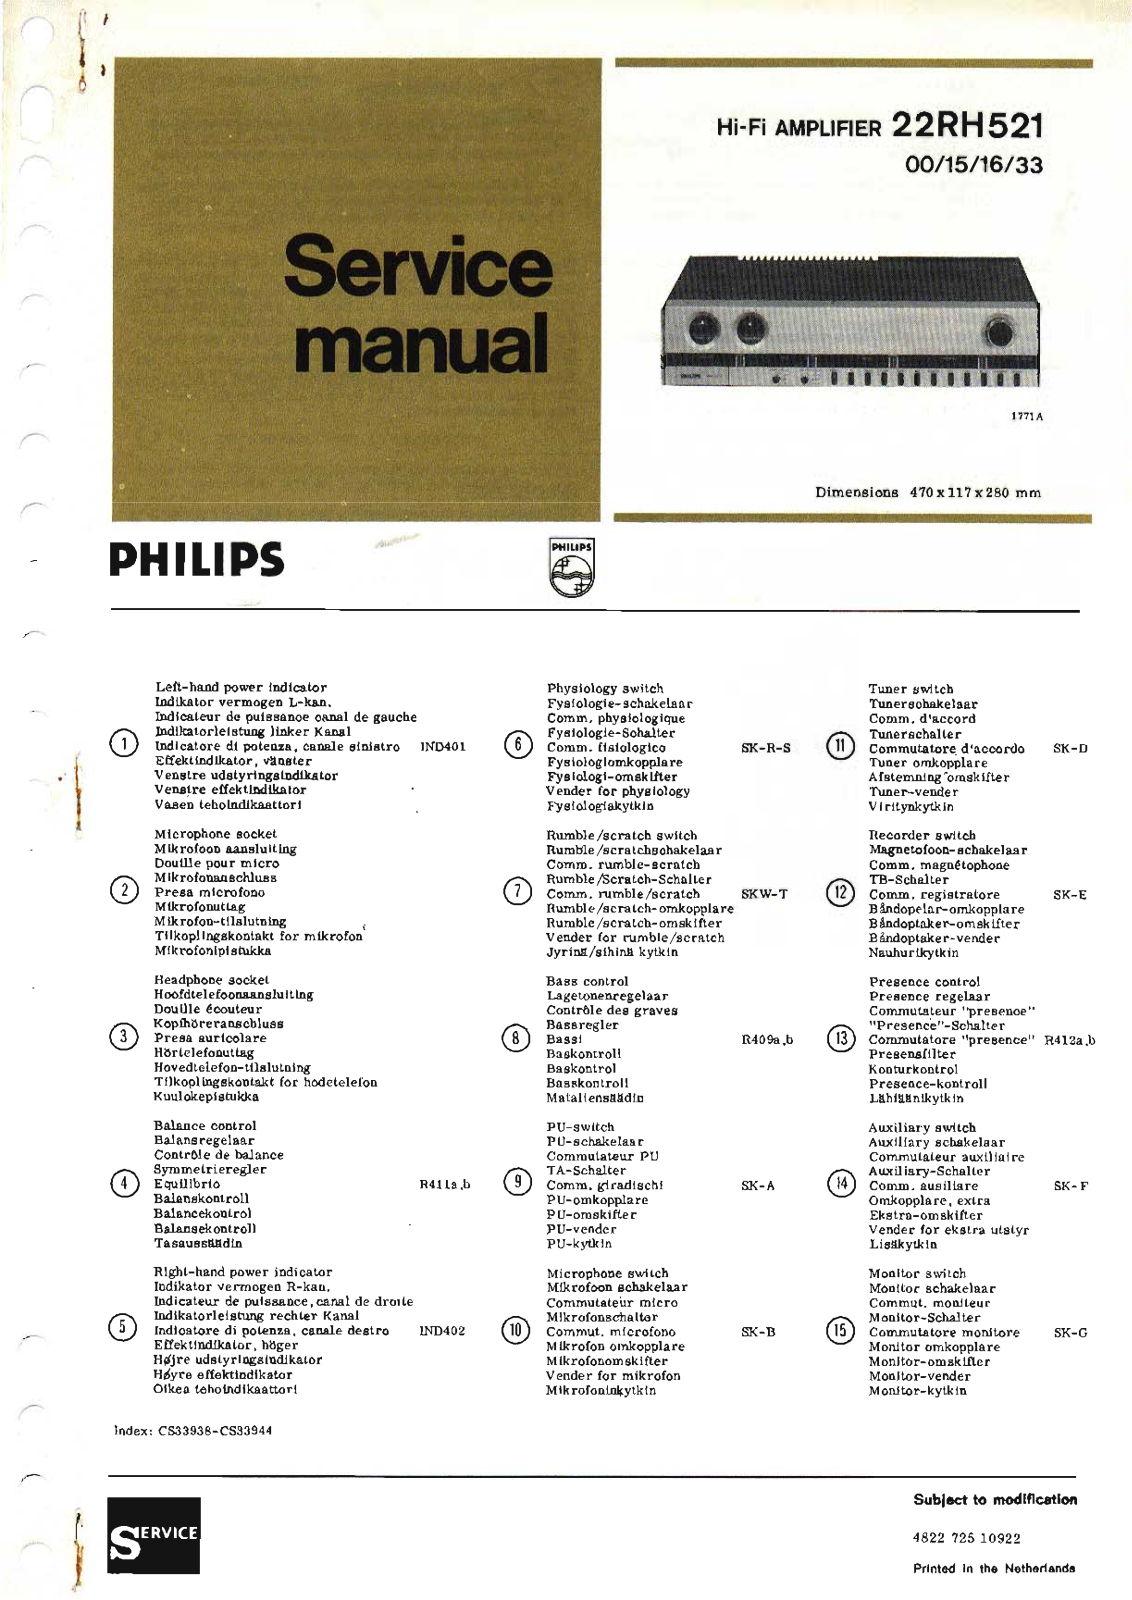 Philips 22-RH-521 Service Manual